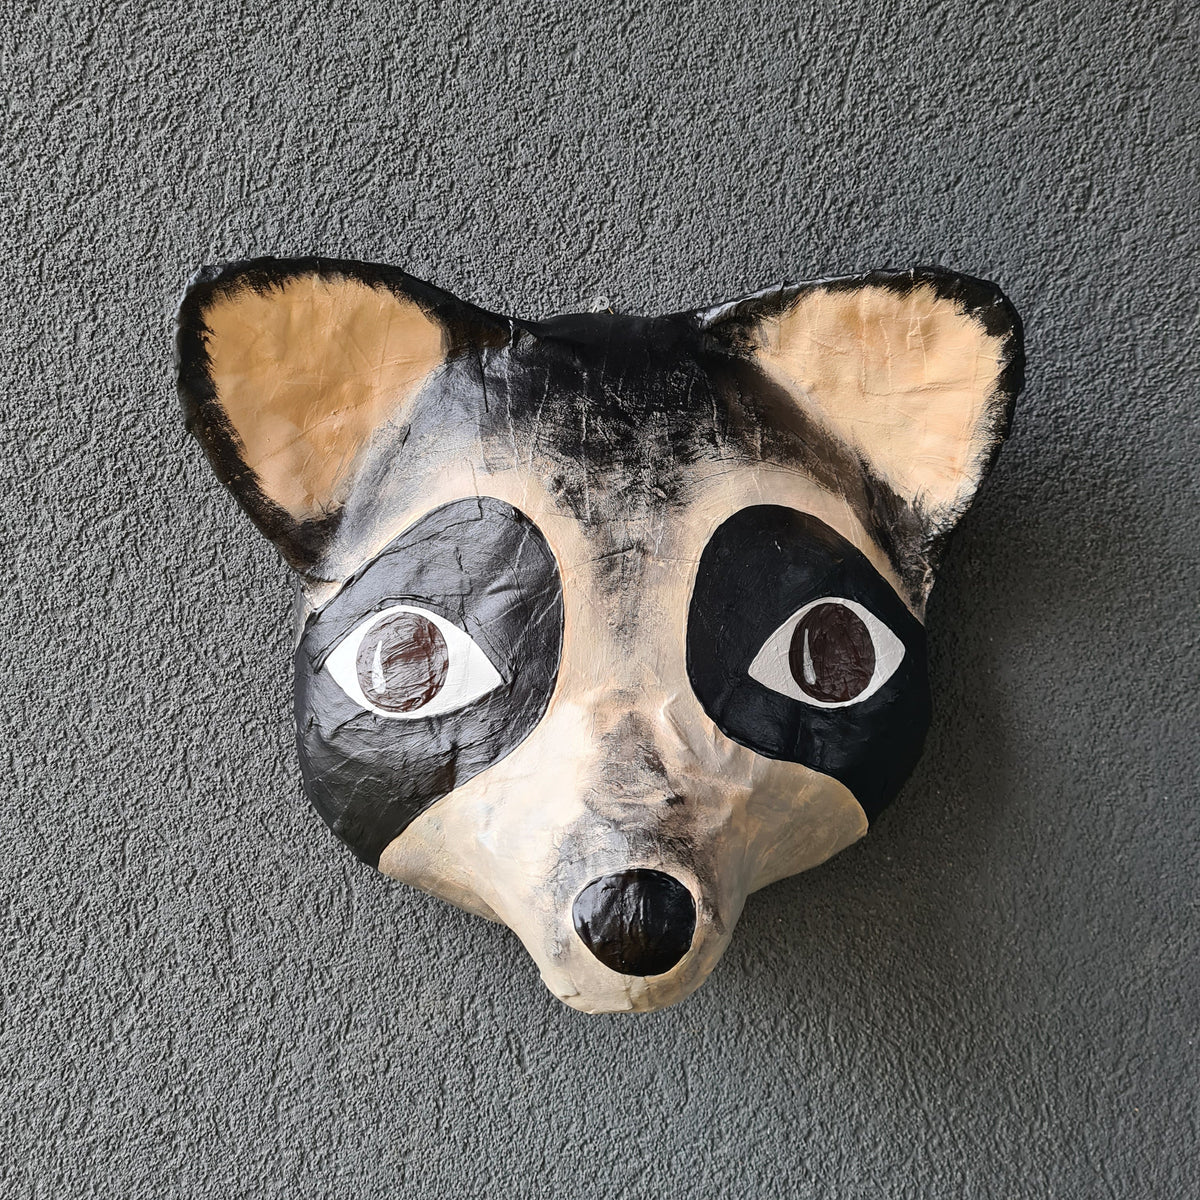 Paper Mache` Animal Head - Make